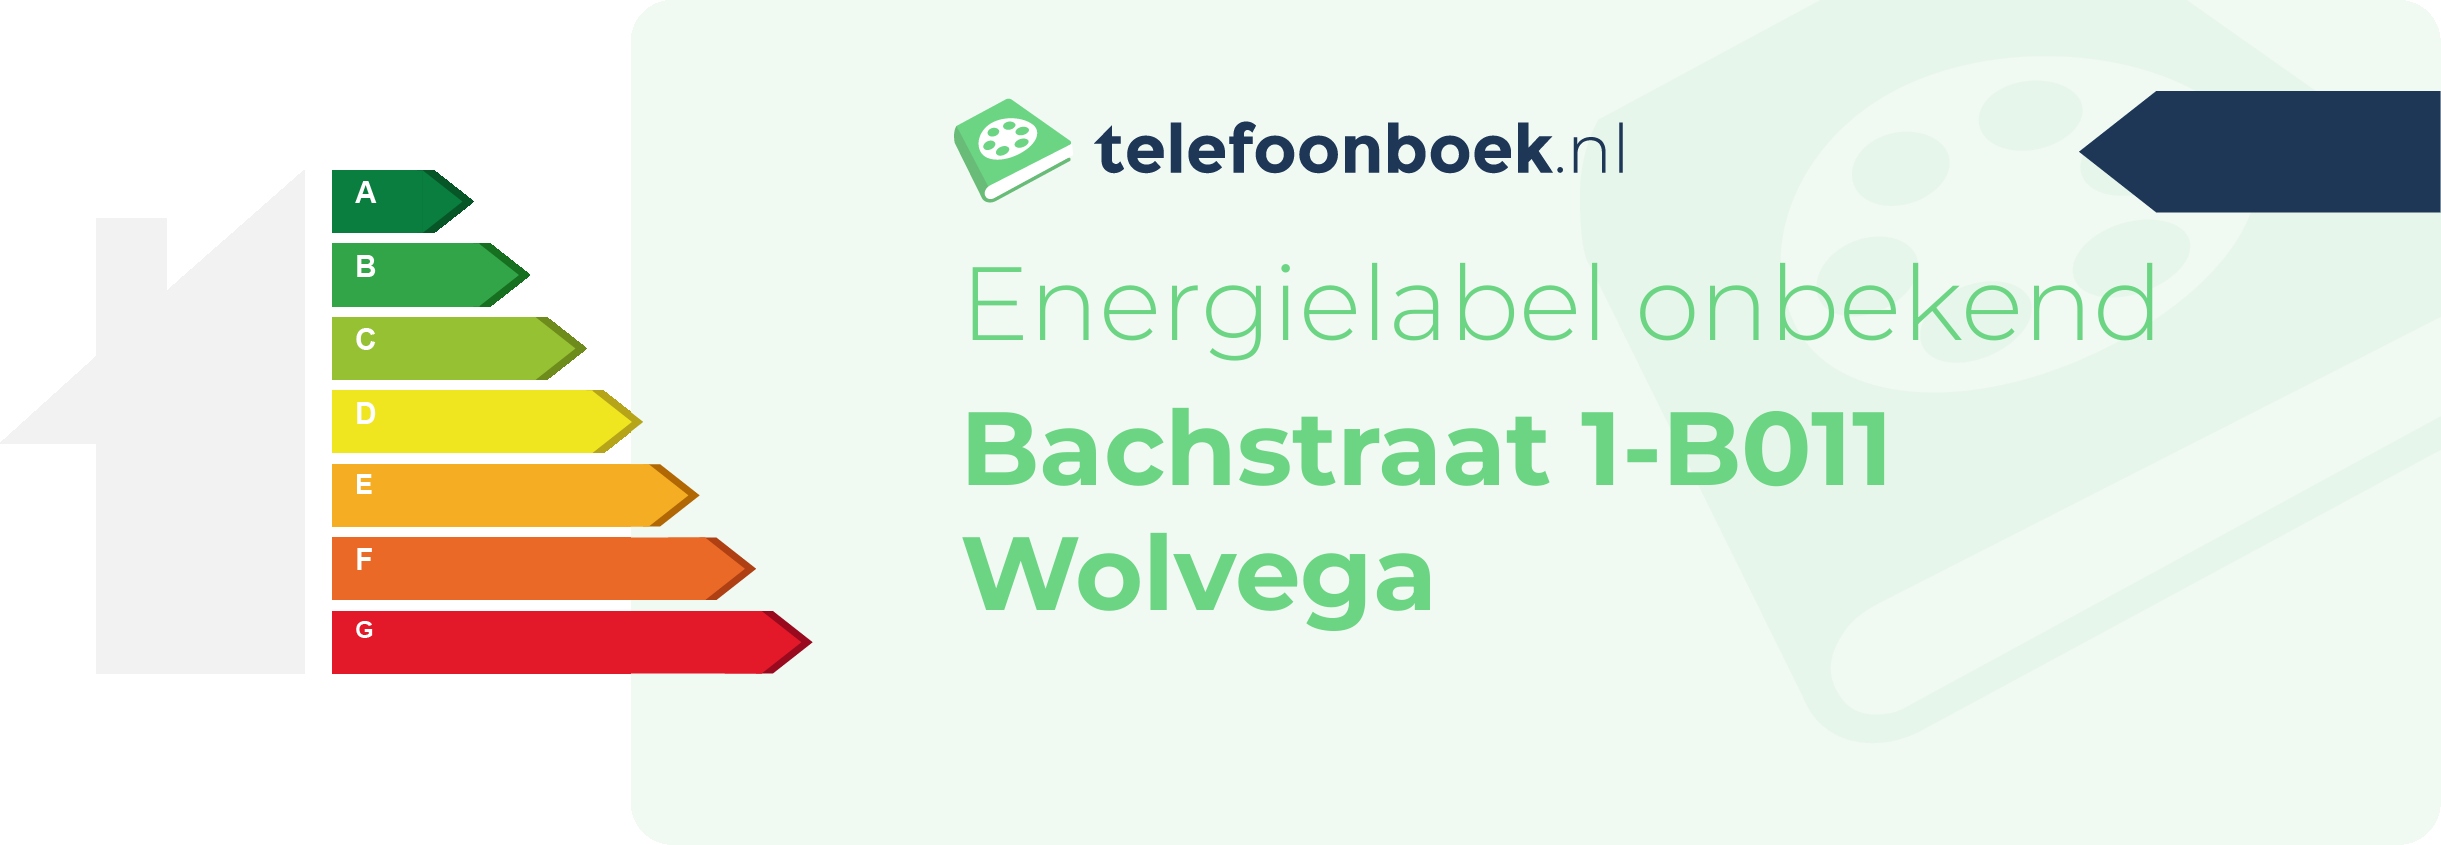 Energielabel Bachstraat 1-B011 Wolvega